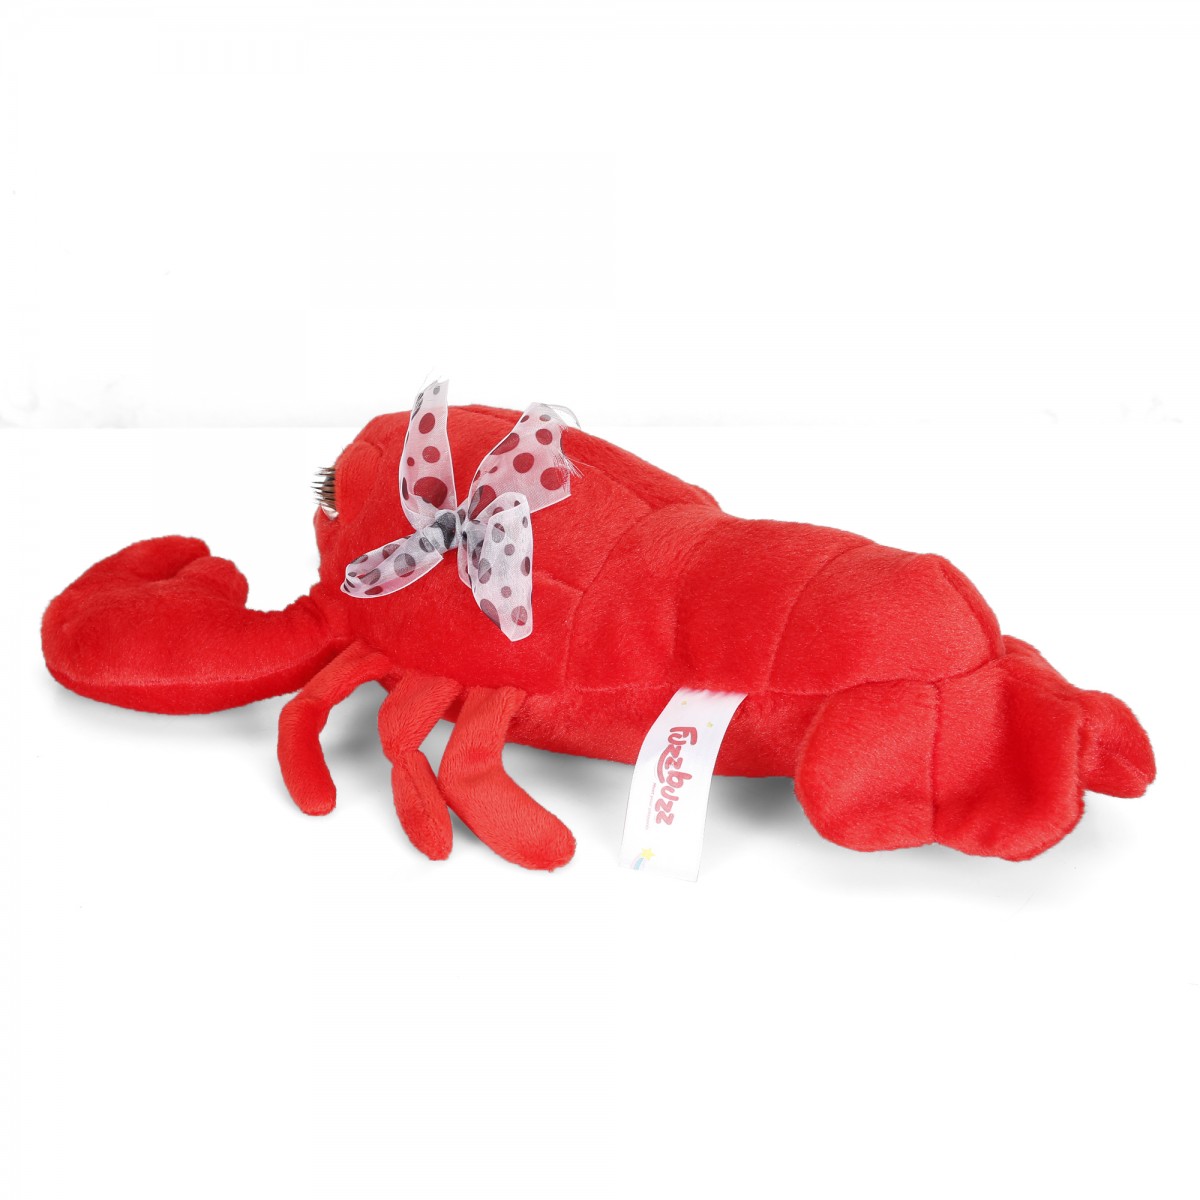 Fuzzbuzz Lobster, Soft Loys for Kids, 30cm, Red